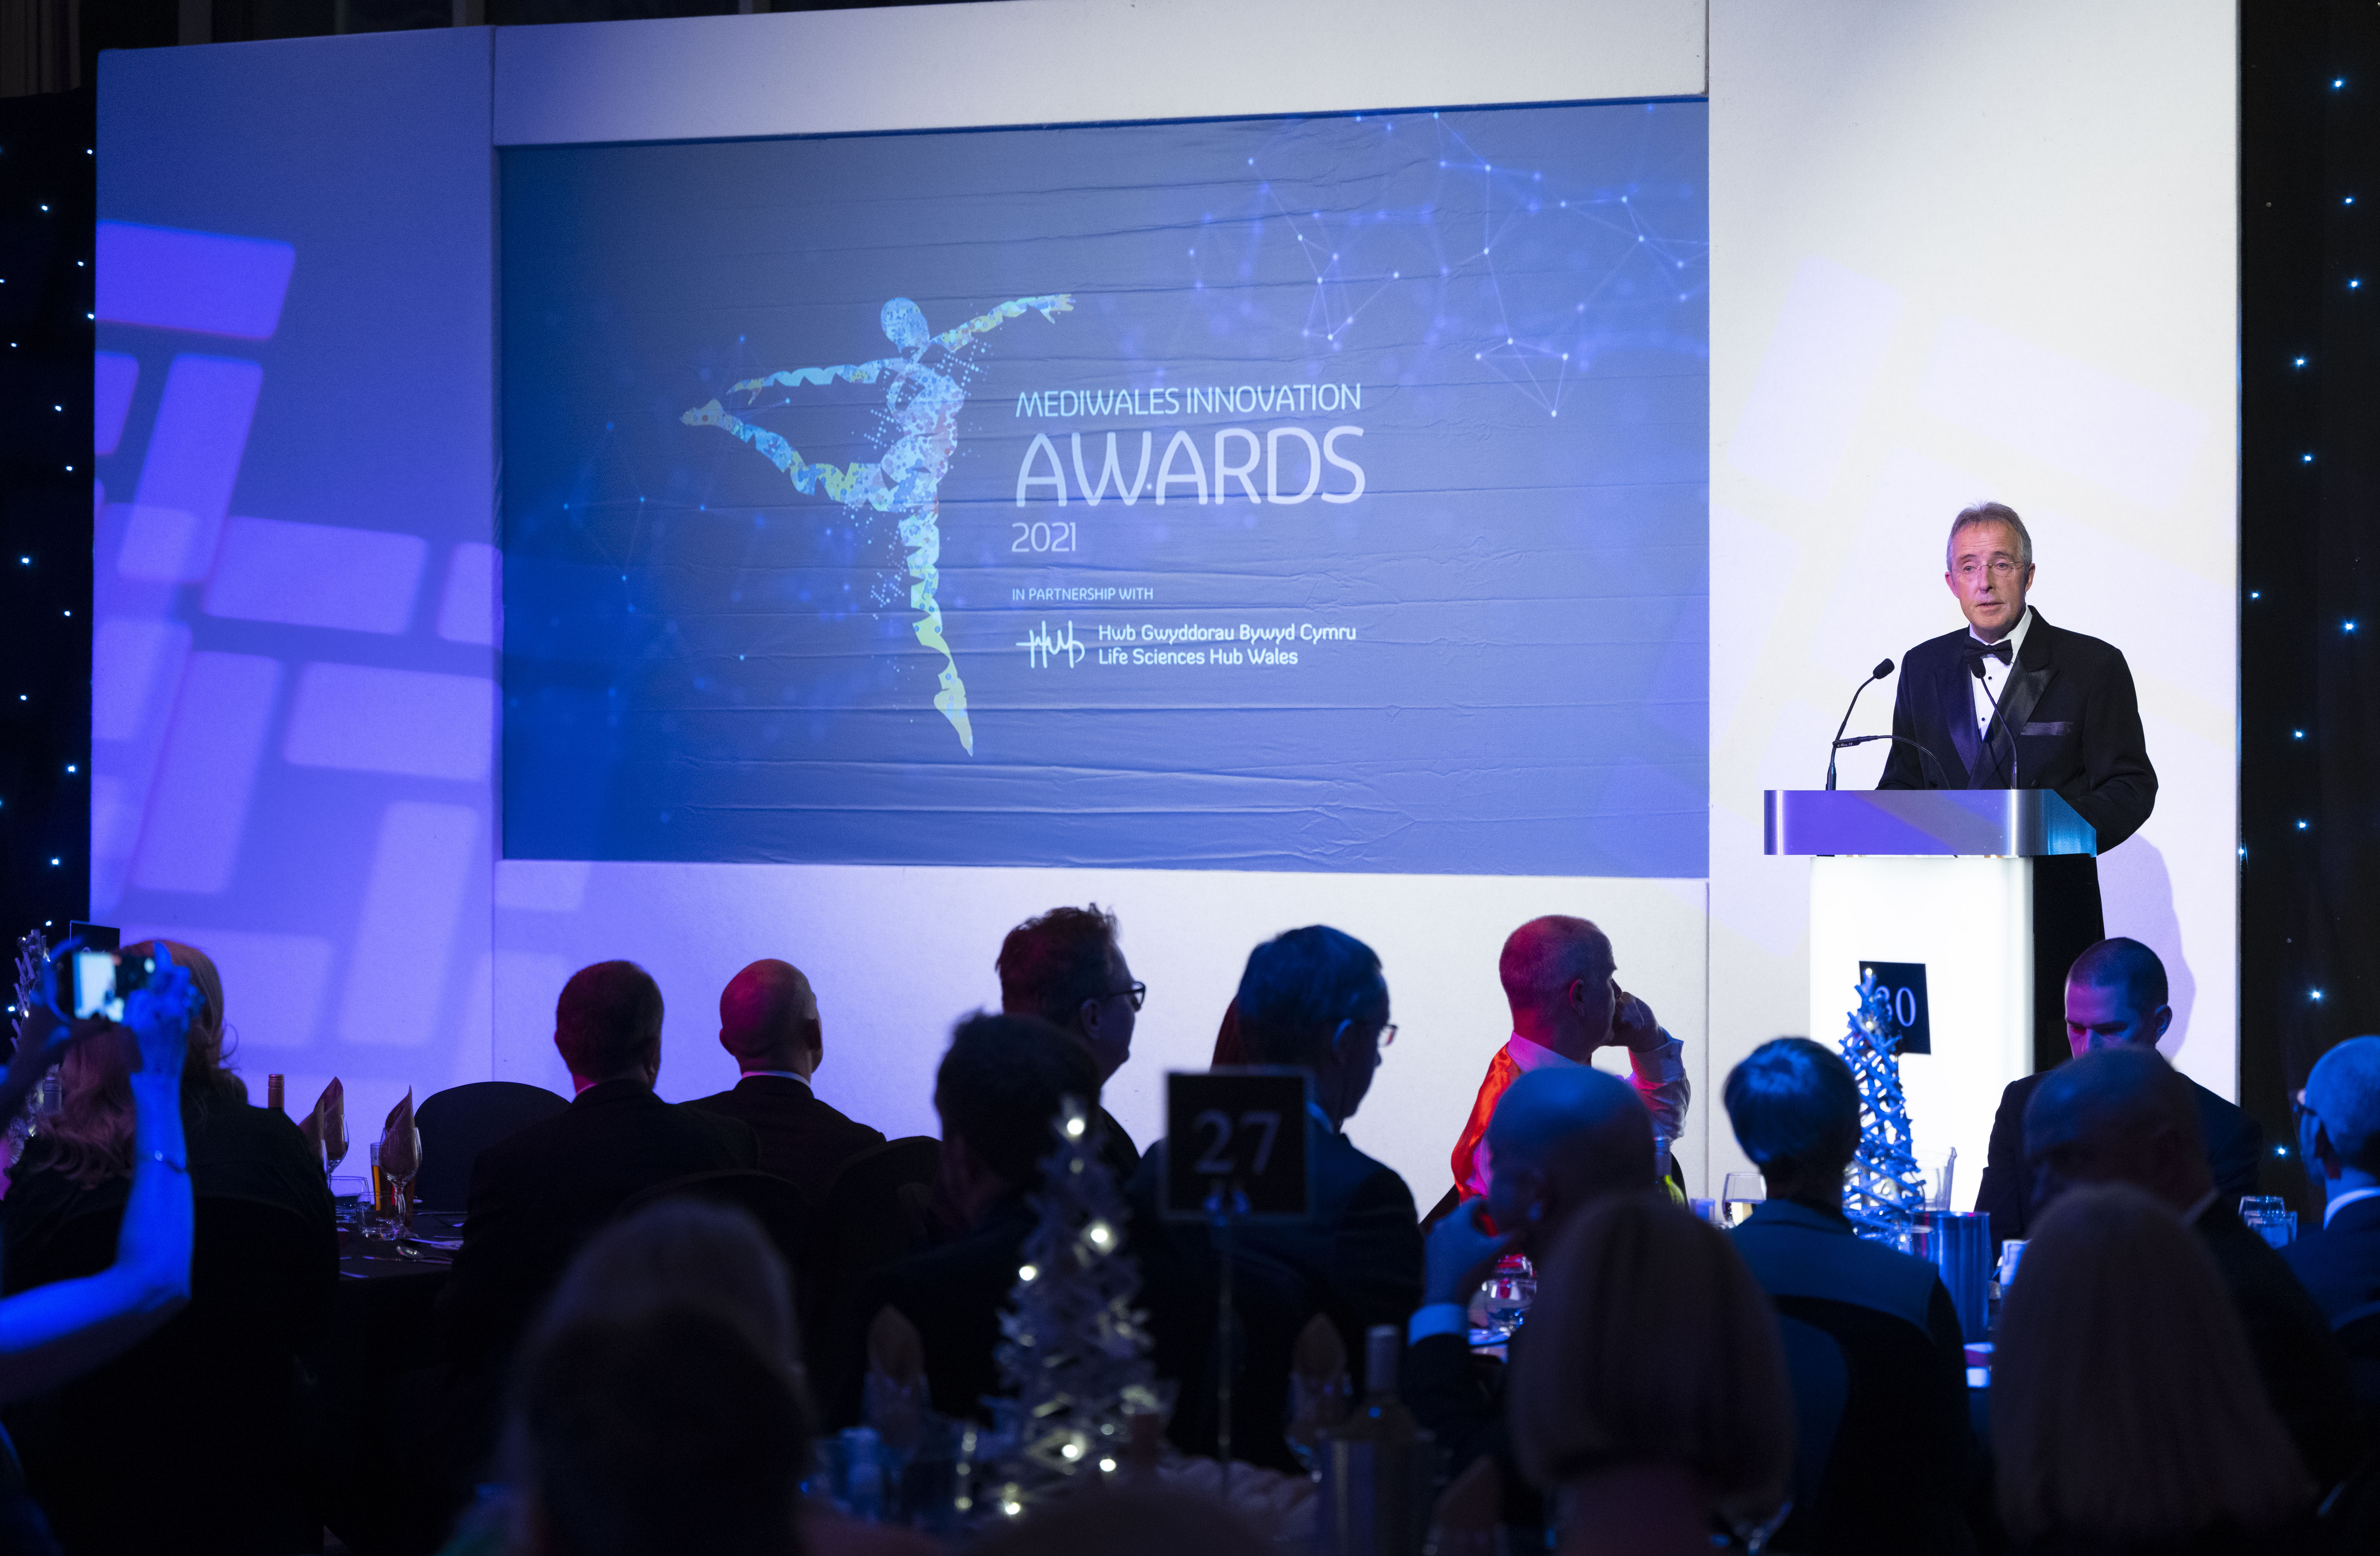 Chris Martin, Life Sciences Hub Wales Chairman, presenting at the 2021 Innovation Awards